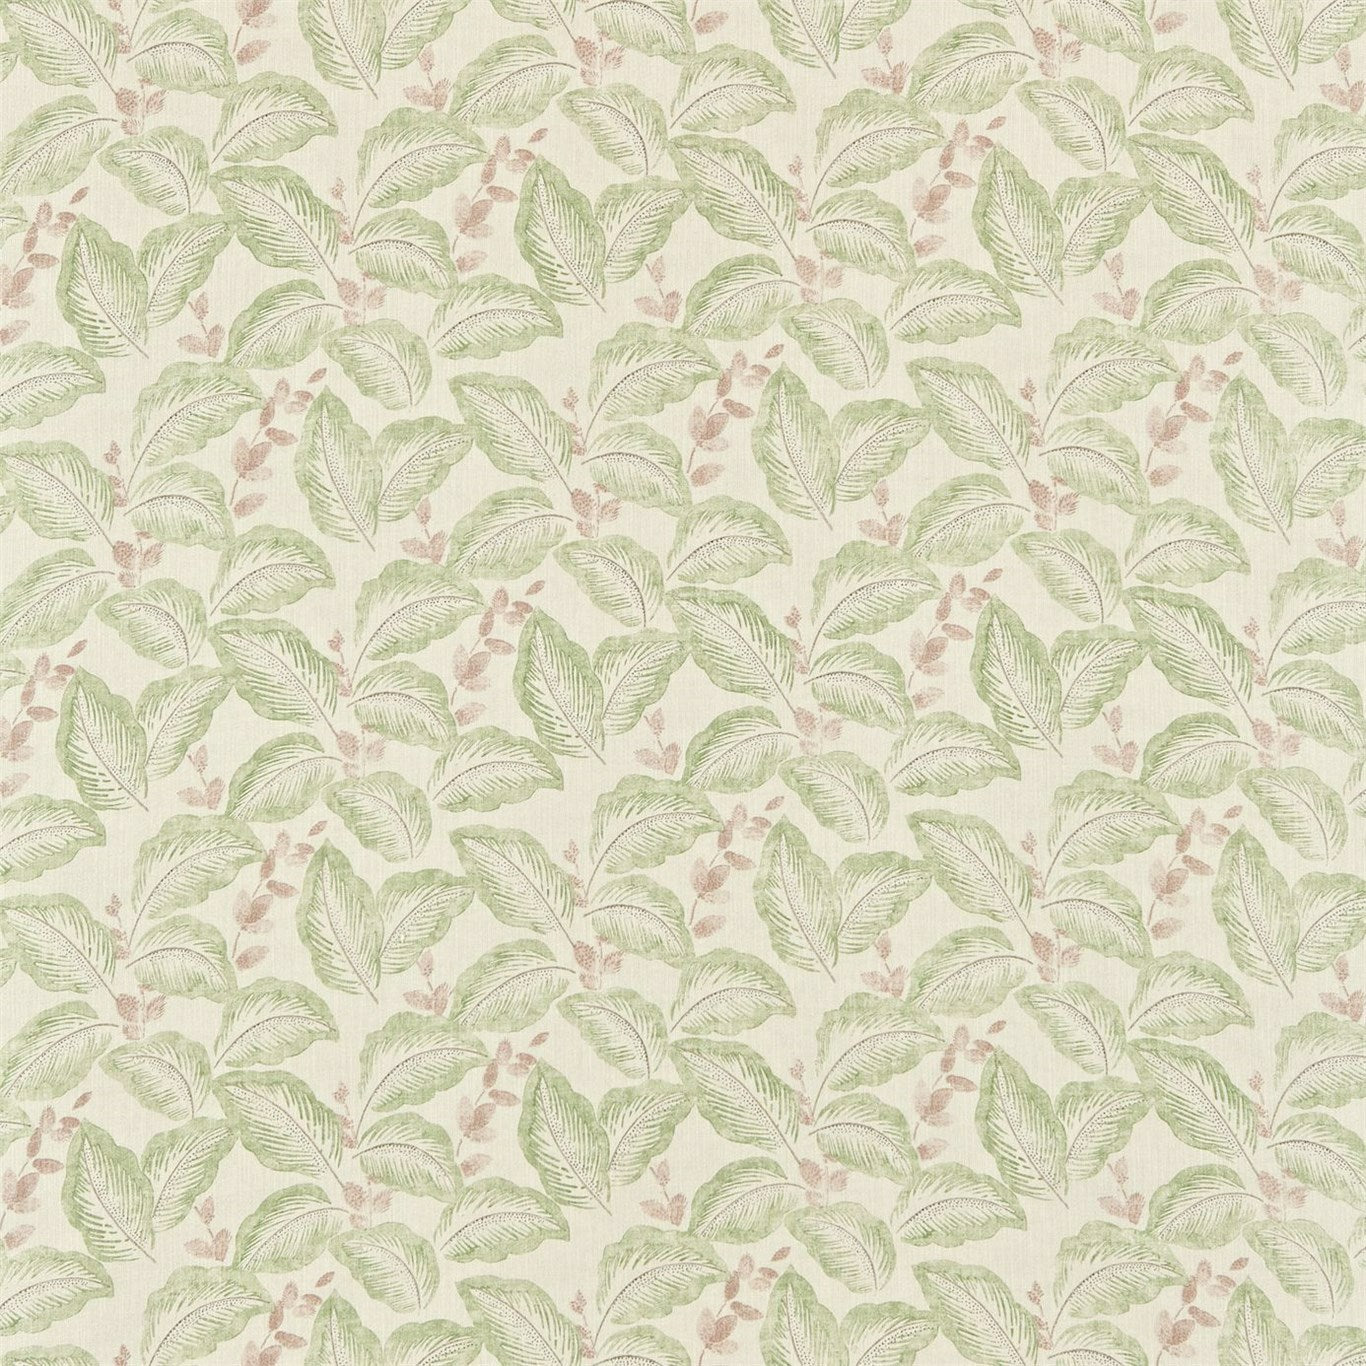 Box Hill Fabric by Sanderson - DRCH222090 - Moss/Cream